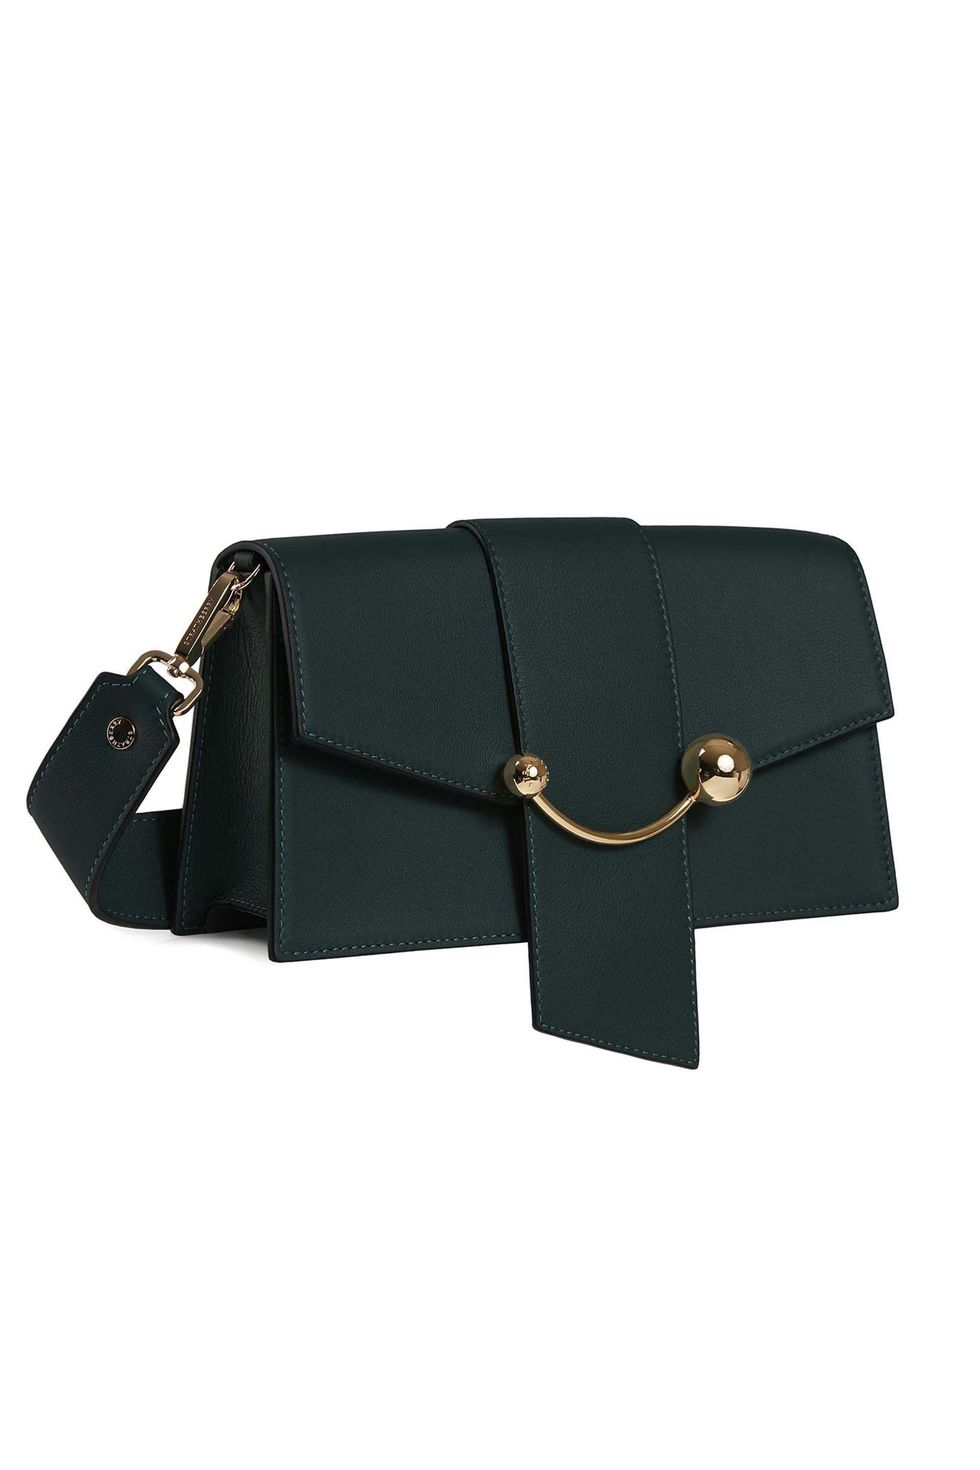 Our Favourite Designer Handbags Priced Under R15,000